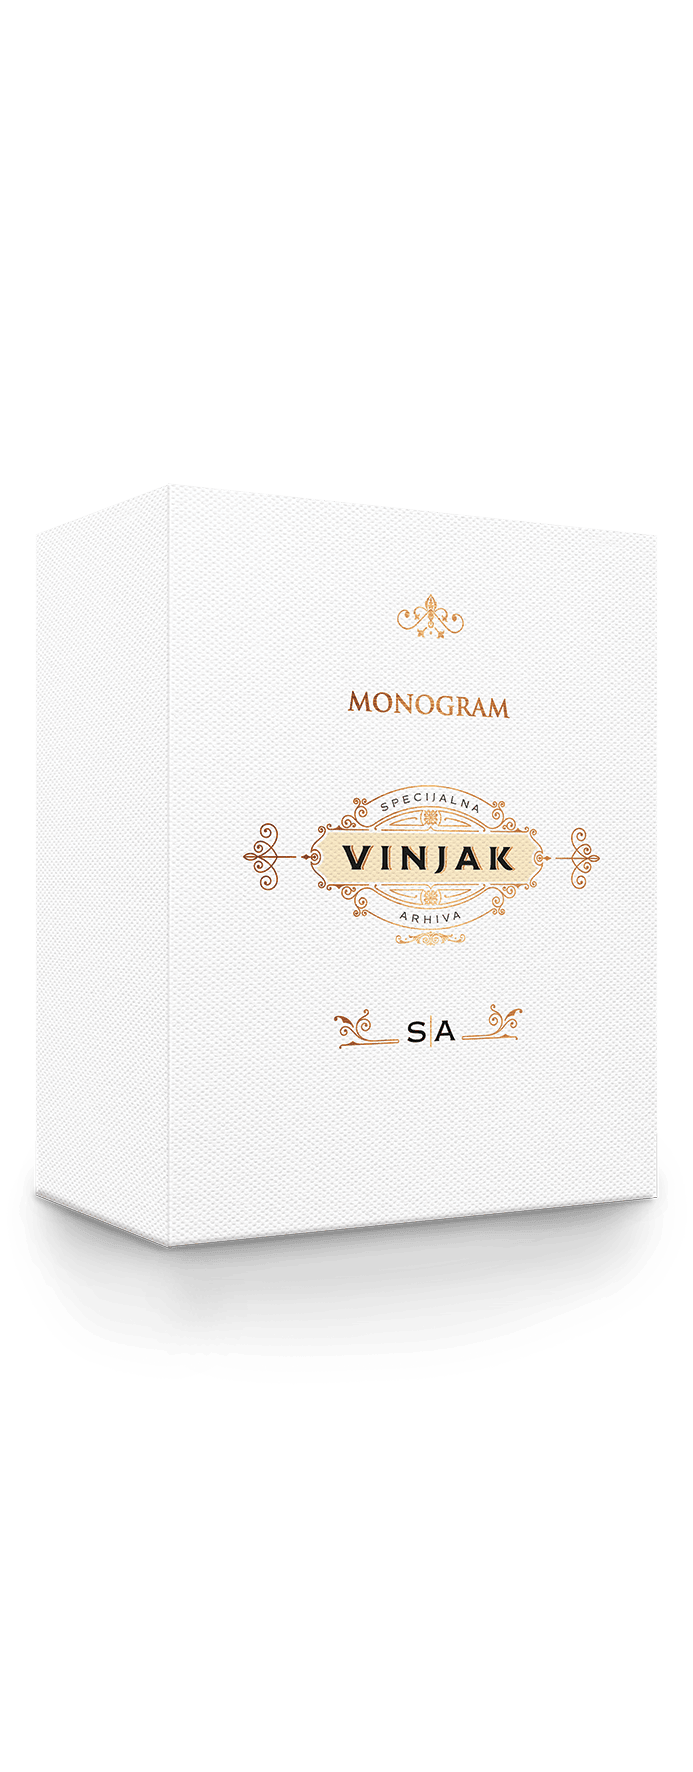 monogram-vinjak-se-kutija